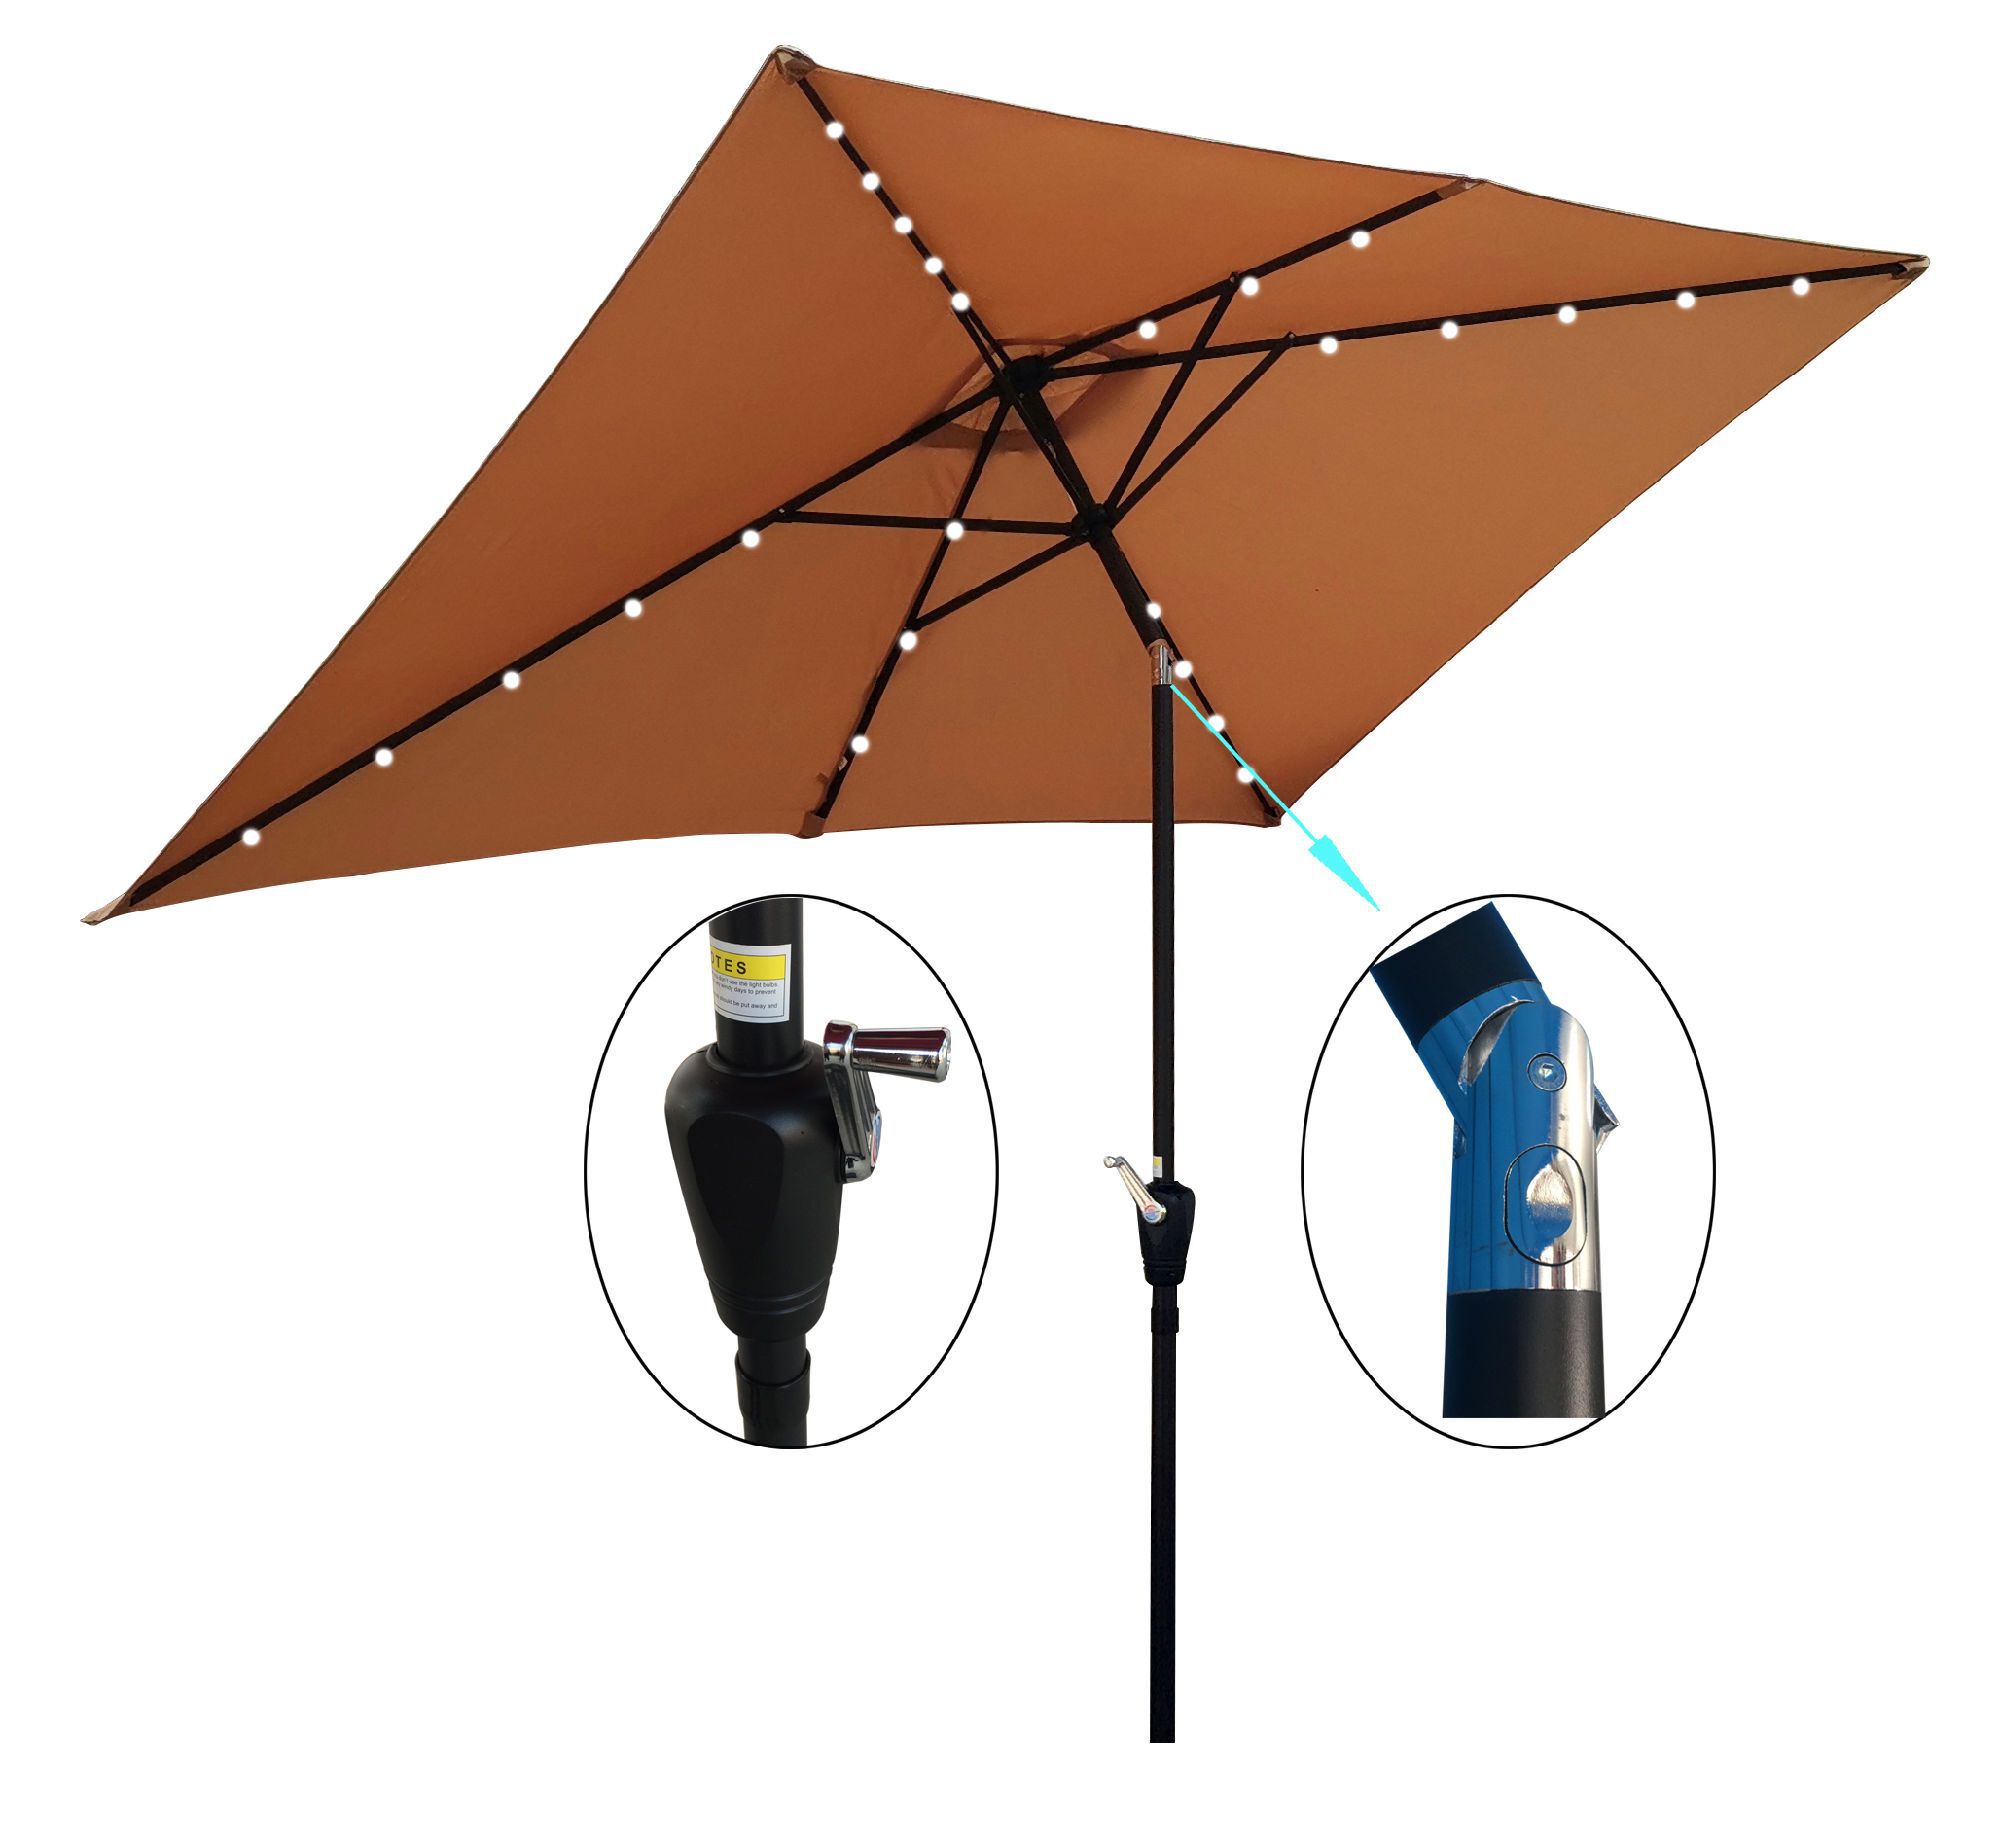 Siavonce Patio Umbrellas at Lowes.com